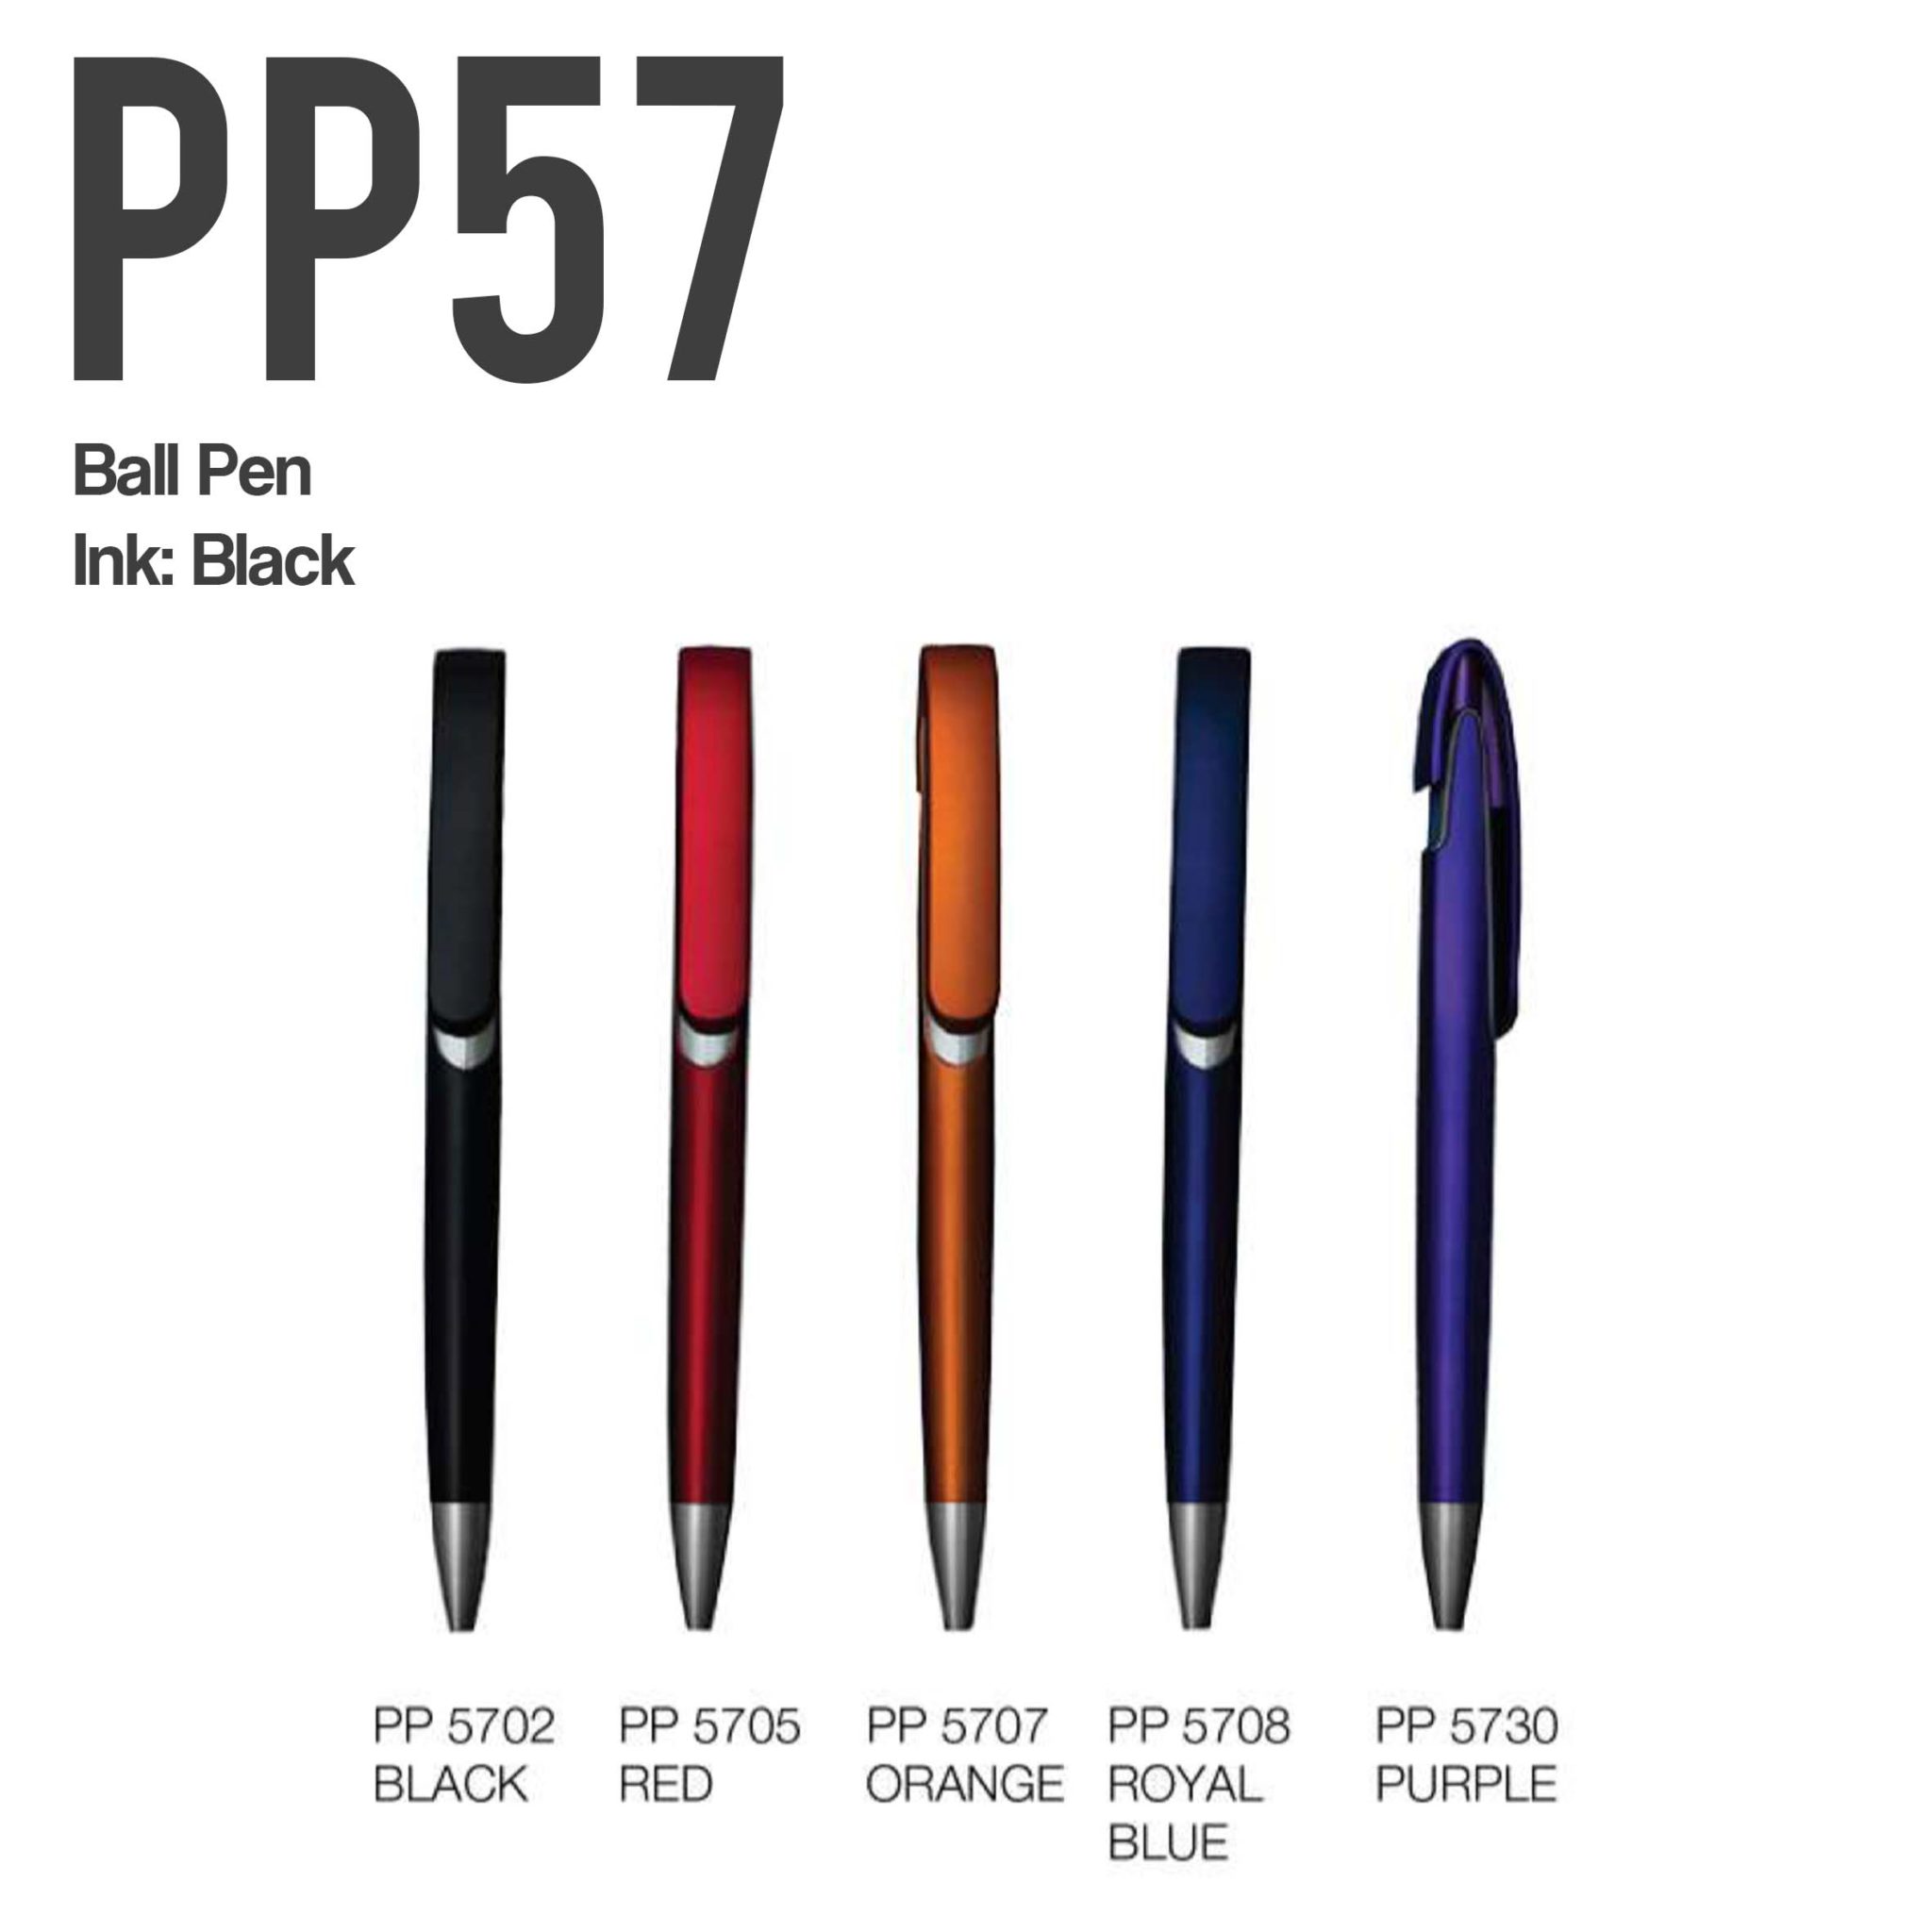 PP57 Plastic pen scaled